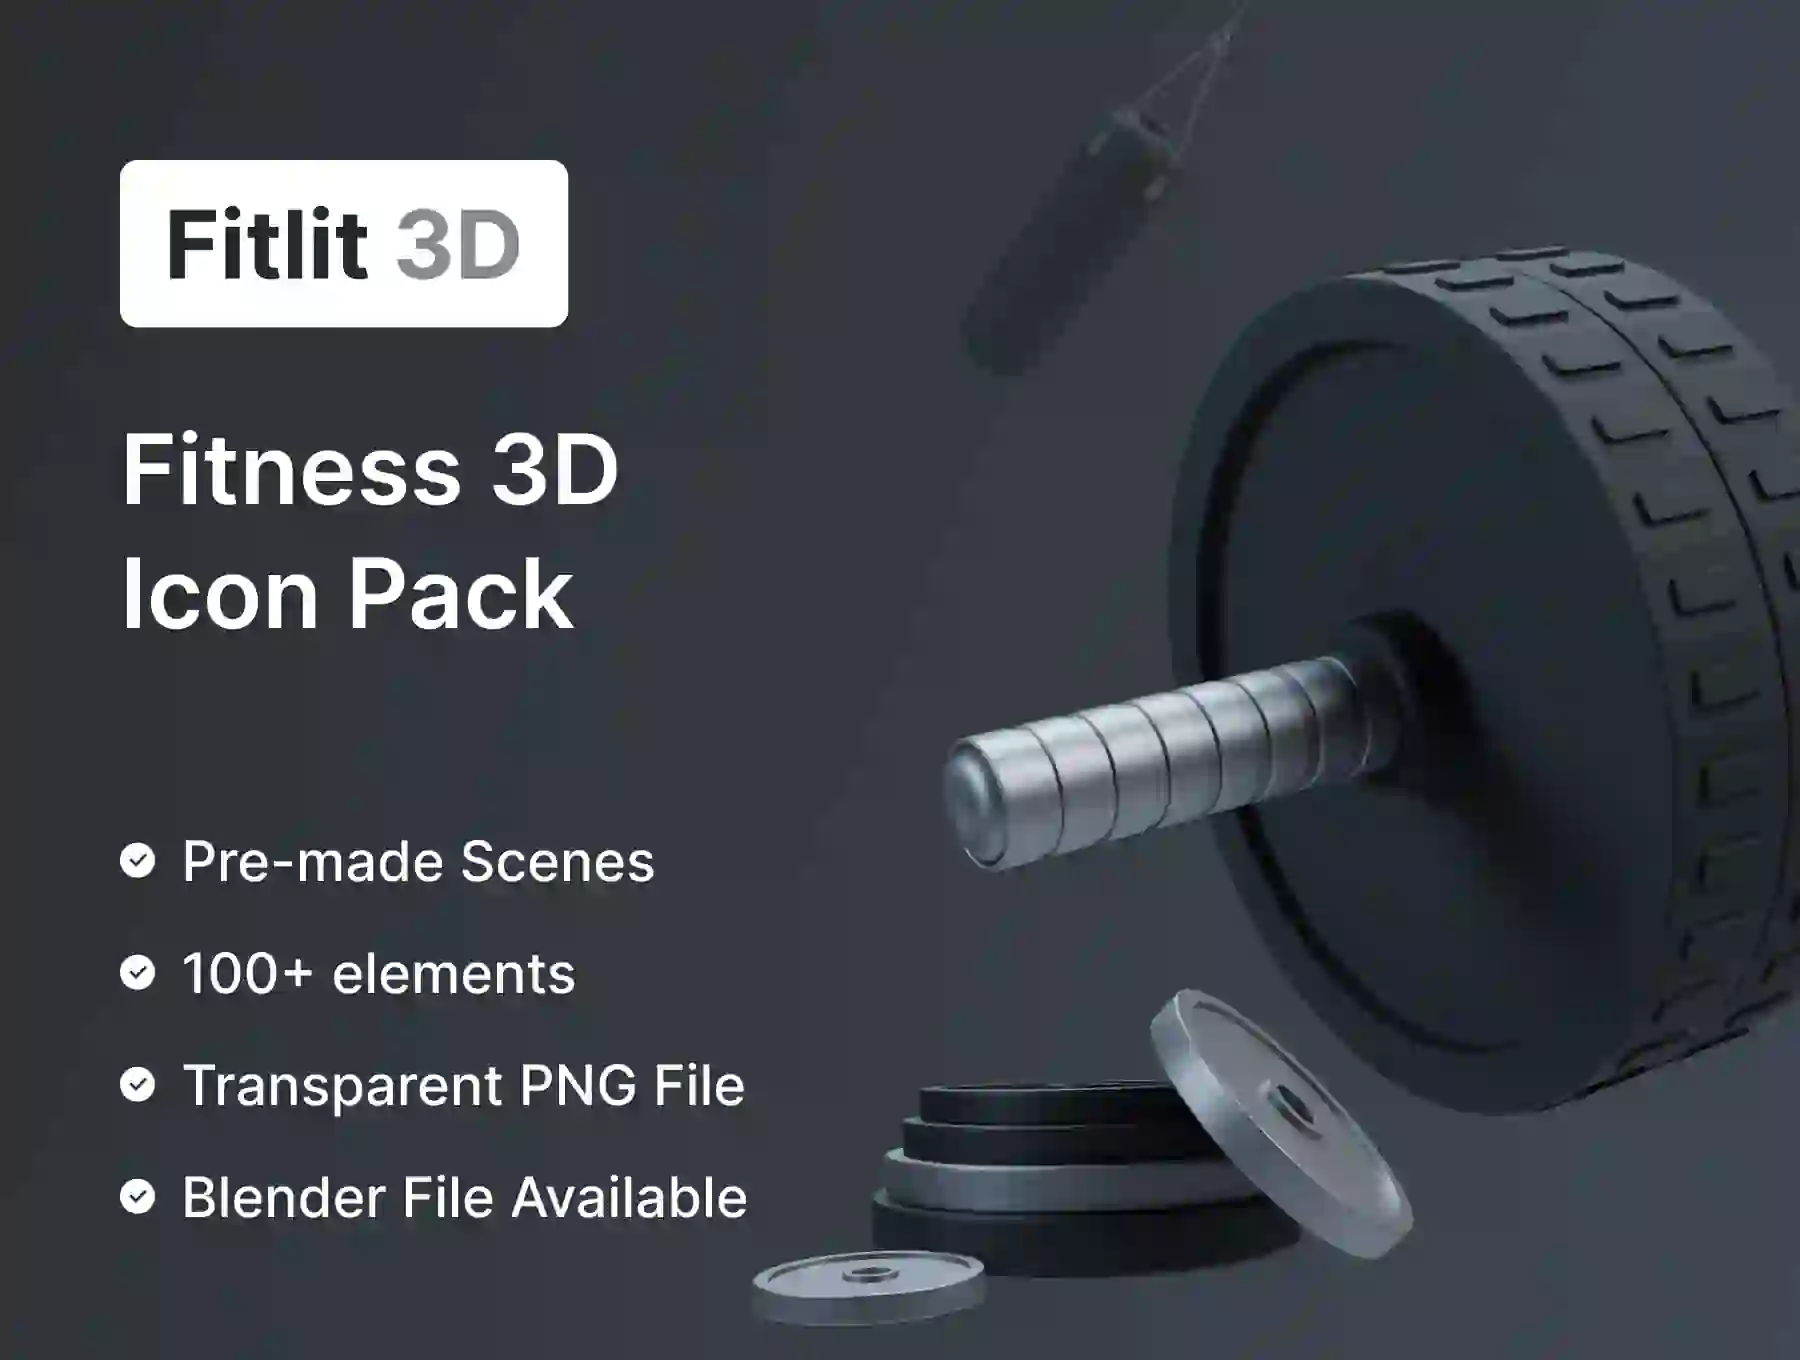 Fitlit 3D - Fitness 3D Models